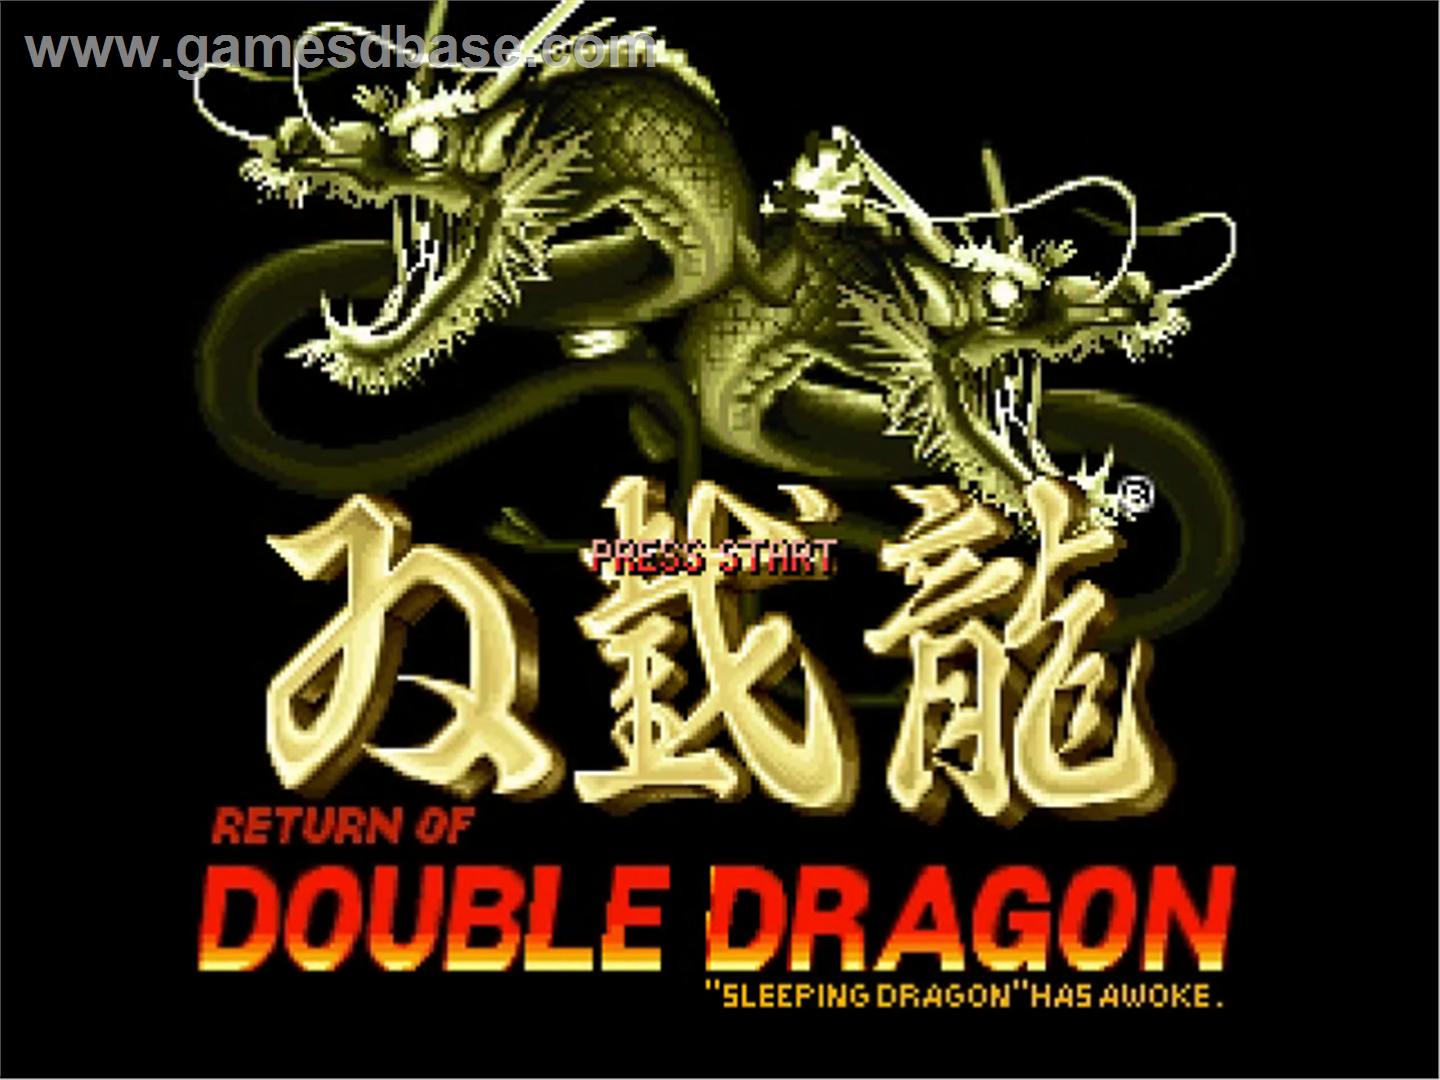 Super return. Return of Double Dragon. Double Dragon боссы. Обои Return of Double Dragon super Nintendo. Double Dragon 3.